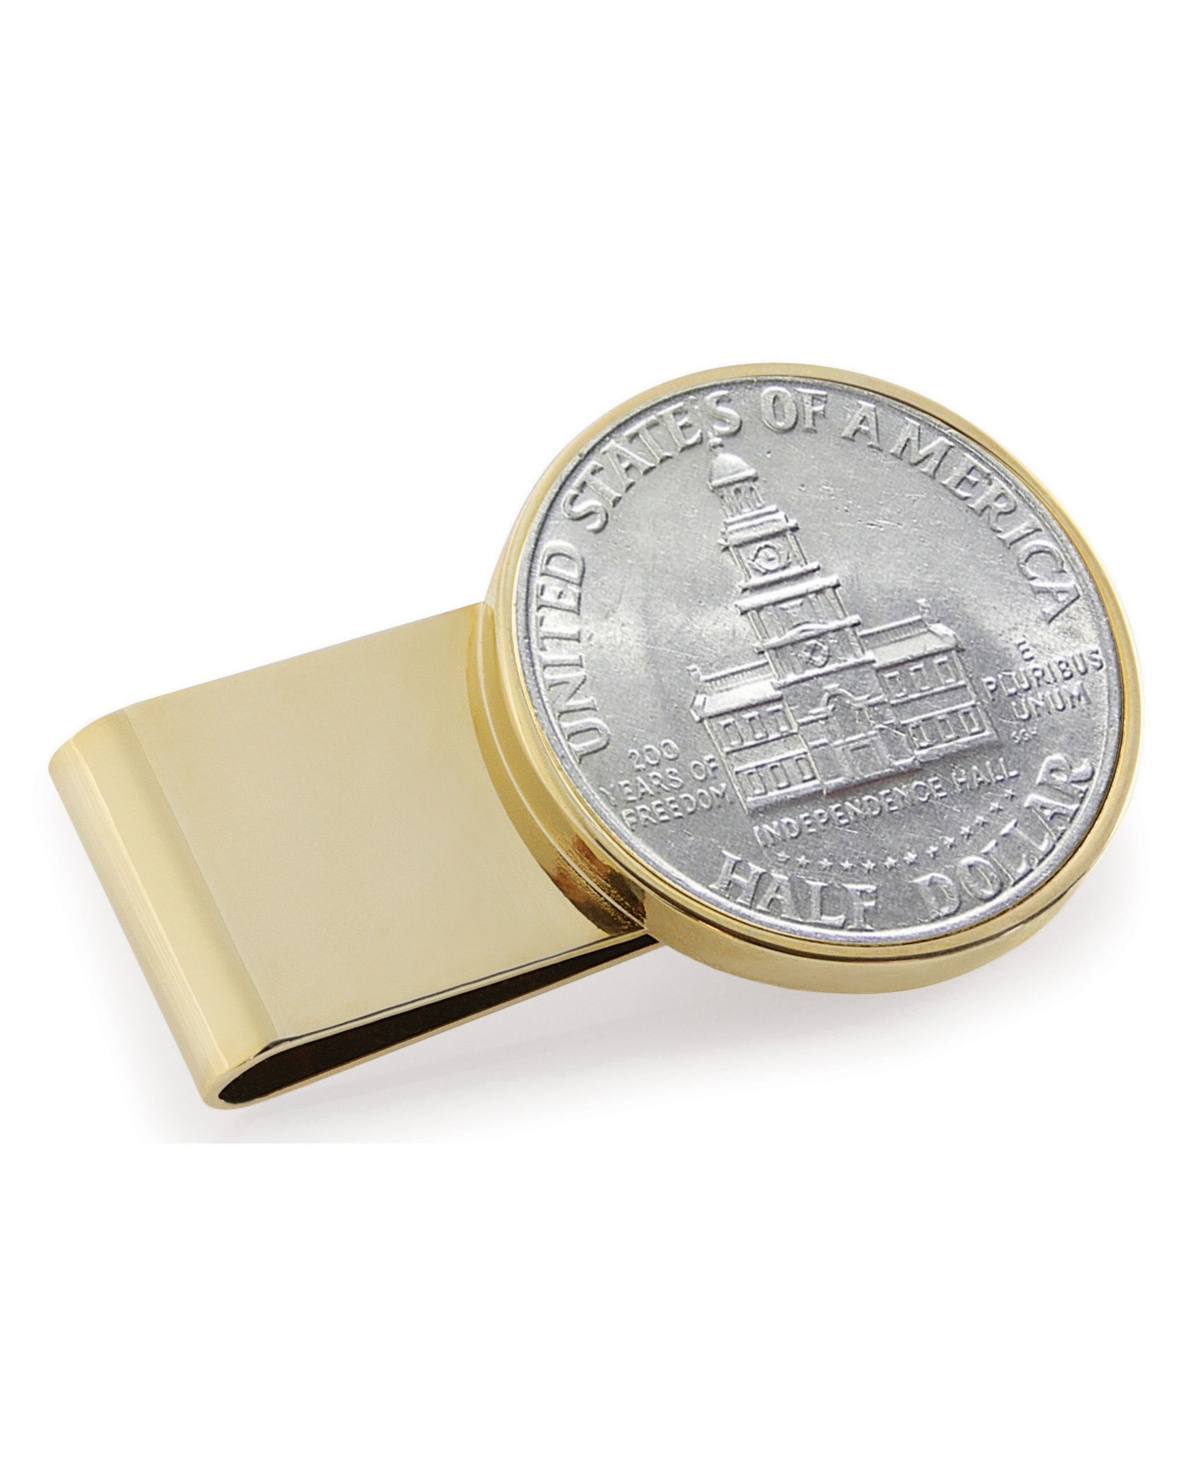 Men's American Coin Treasures Jfk Bicentennial Half Dollar Stainless Steel Coin Money Clip - Gold